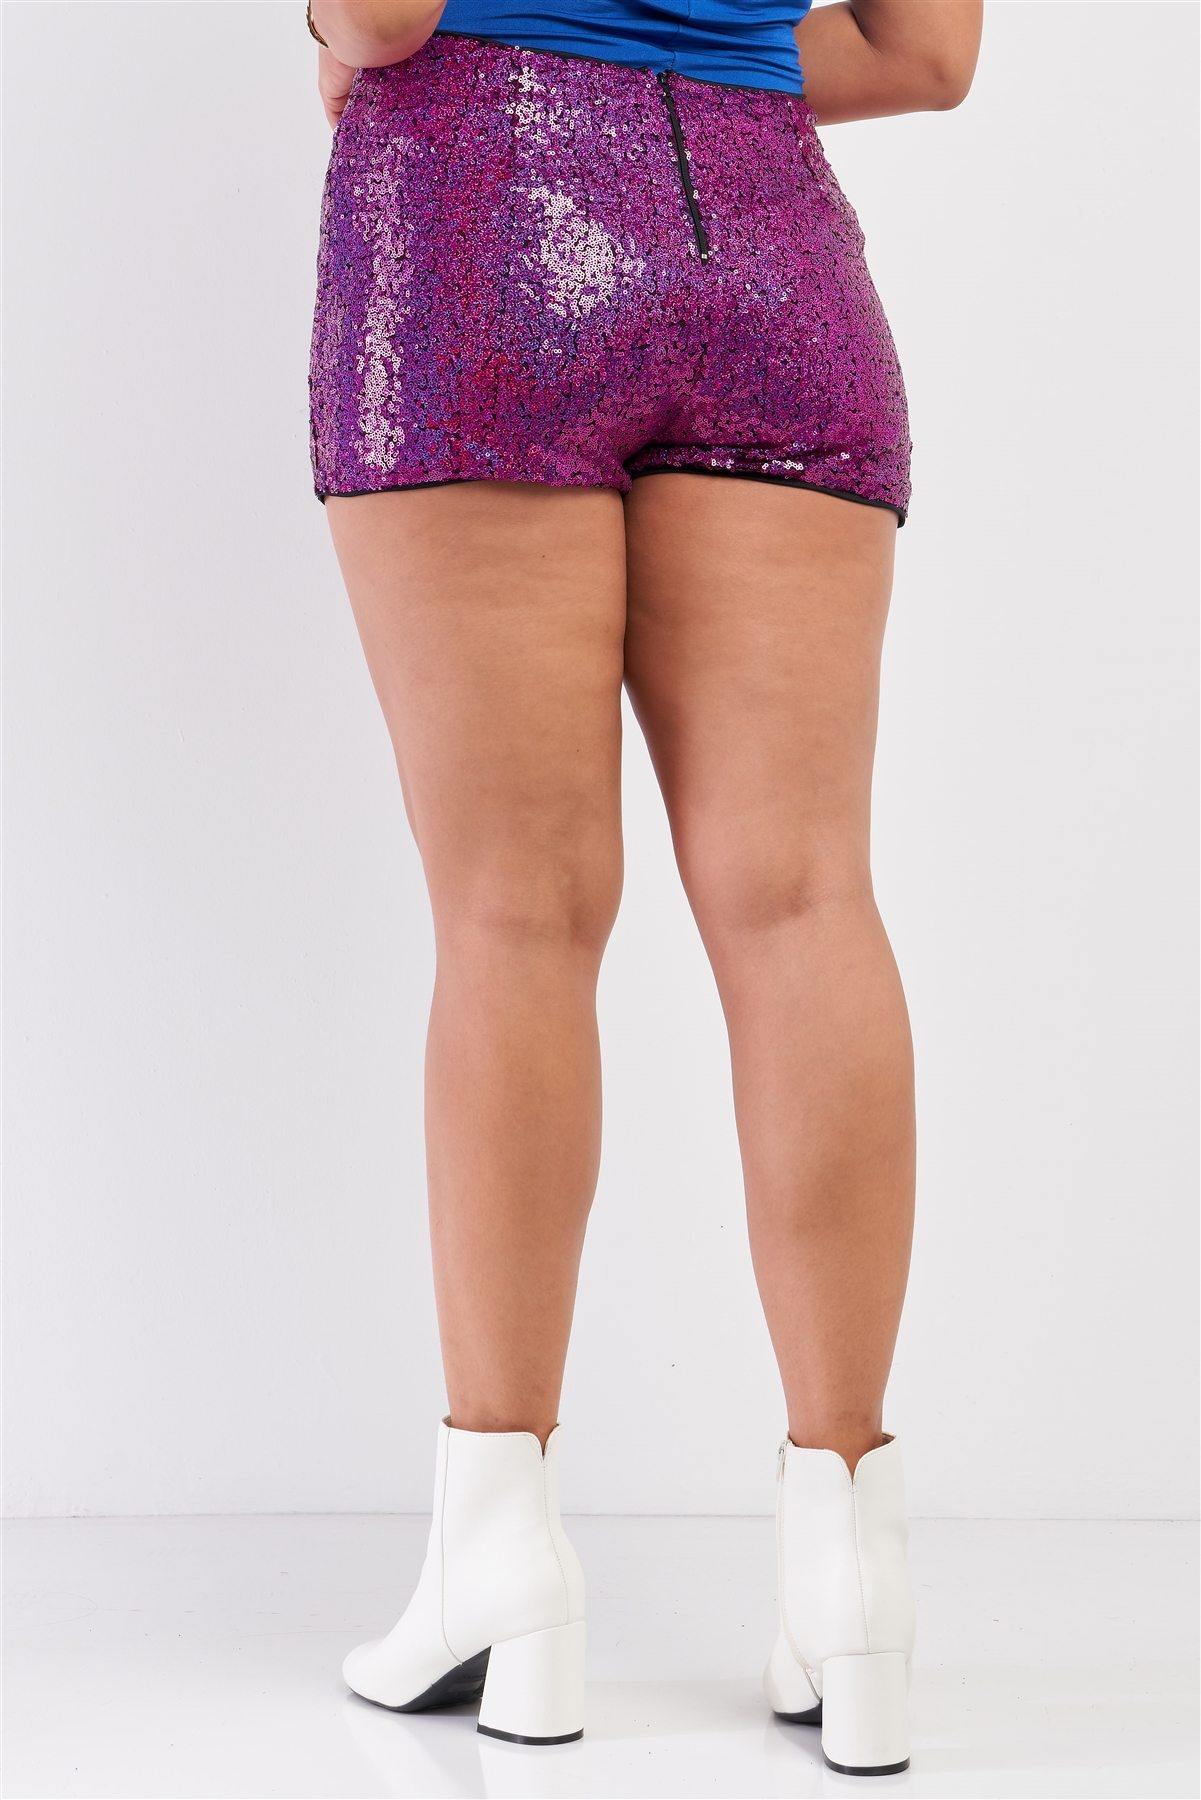 Plus Size Shiny Sequin High Waisted Mini Shorts - Pearlara